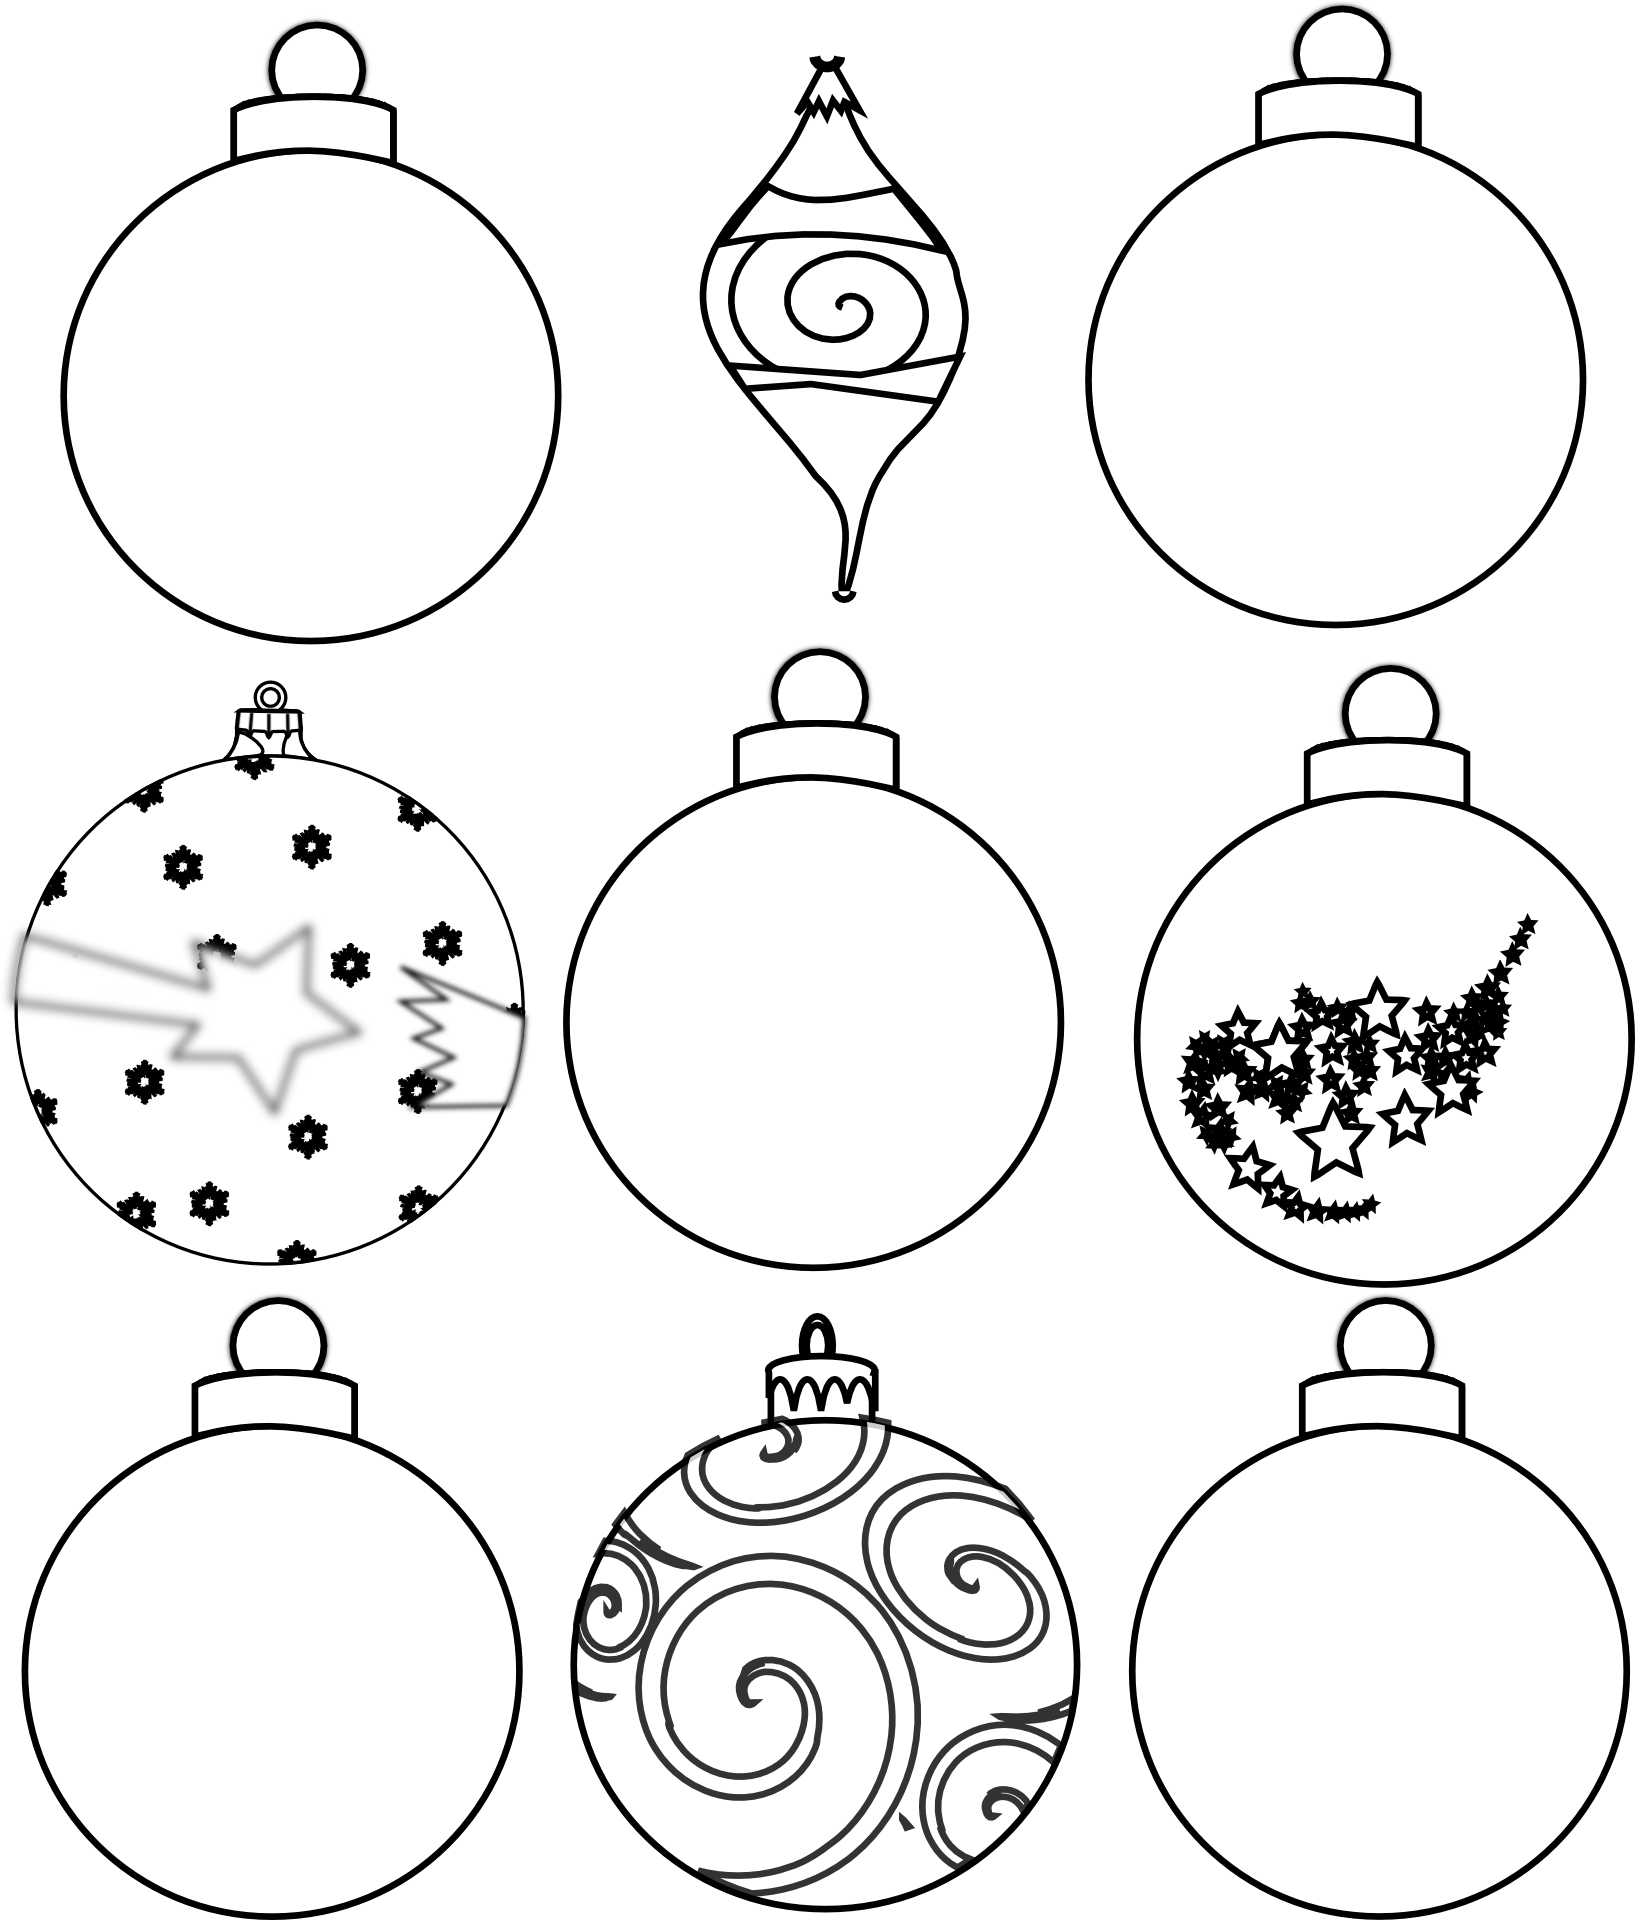 Christmas ball ornaments drawing free image download